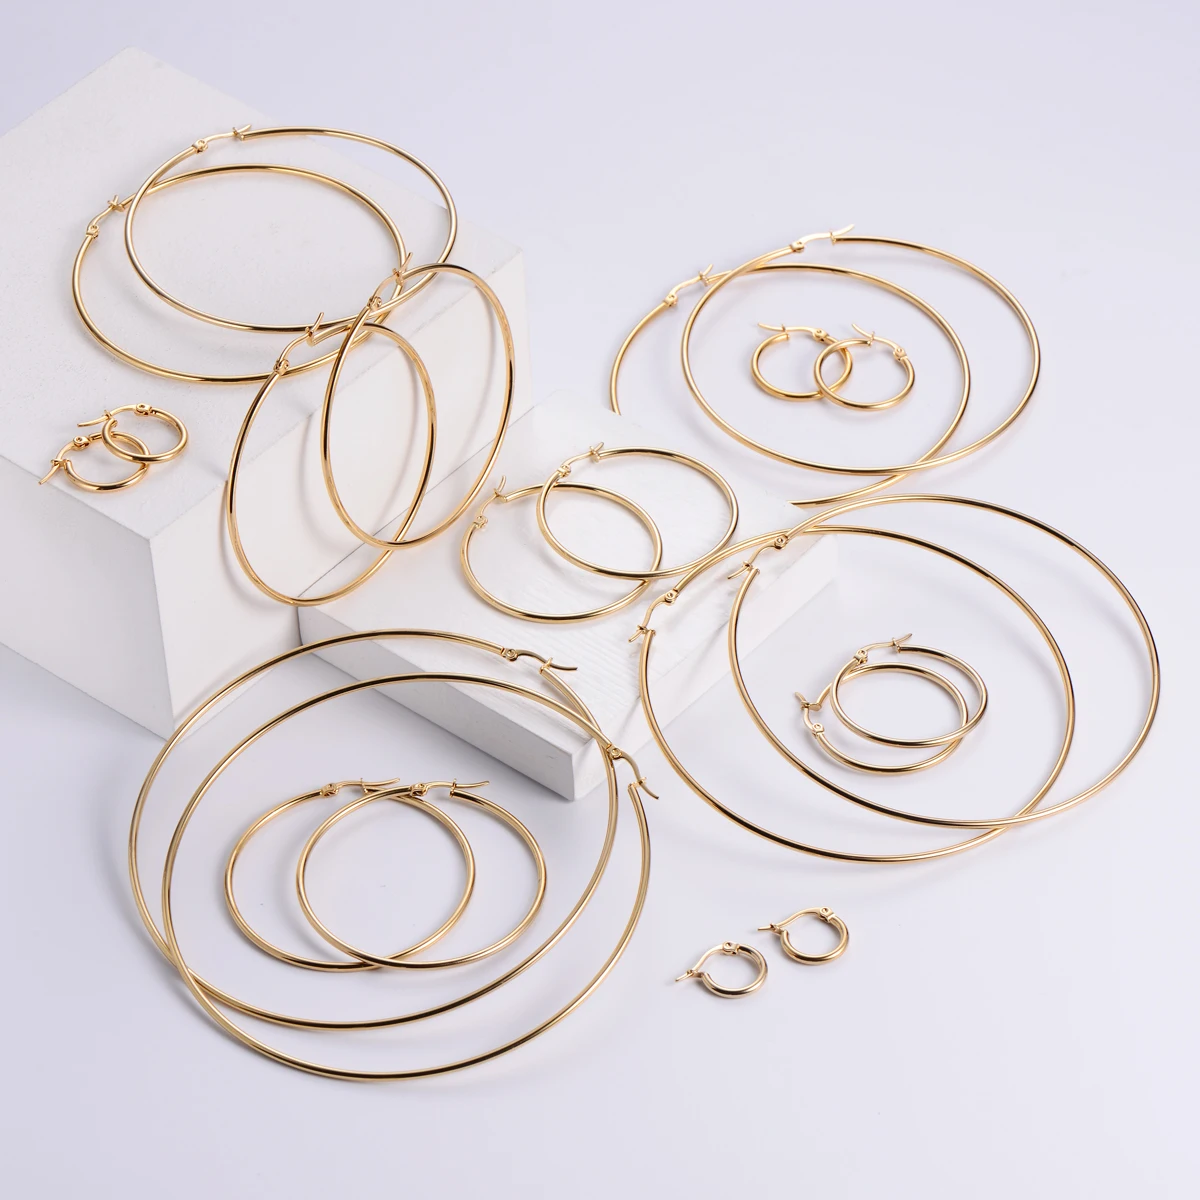 

aretes de moda acero inoxidable women large 18k gold plated stainless steel earrings hoops, 18k gold, silver